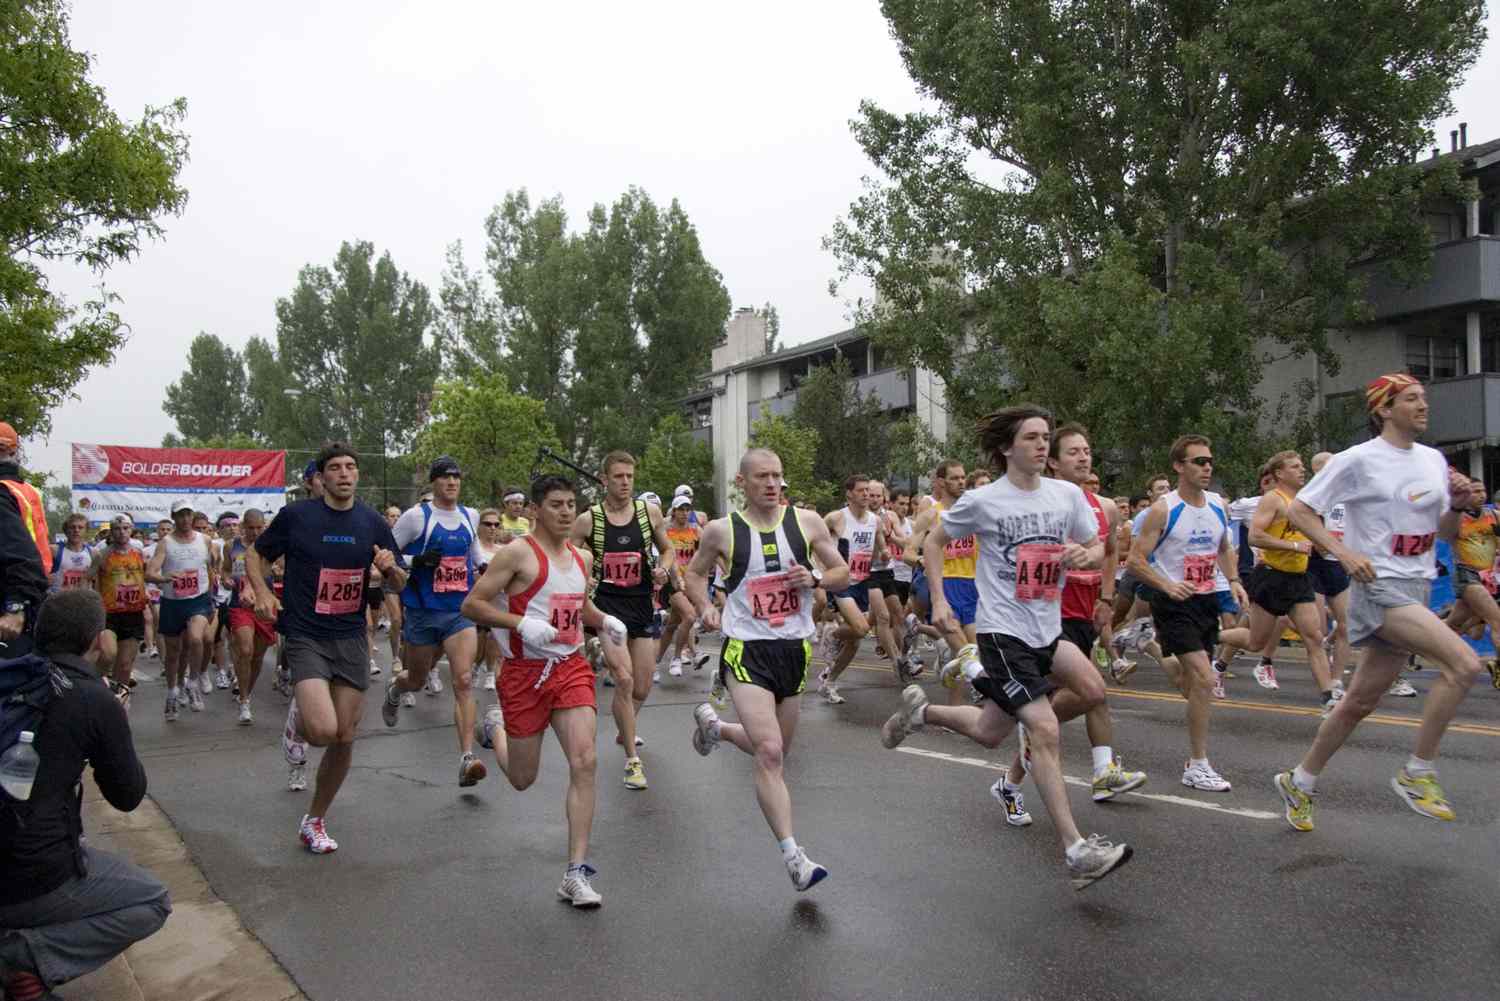 Runners racing in a 10k